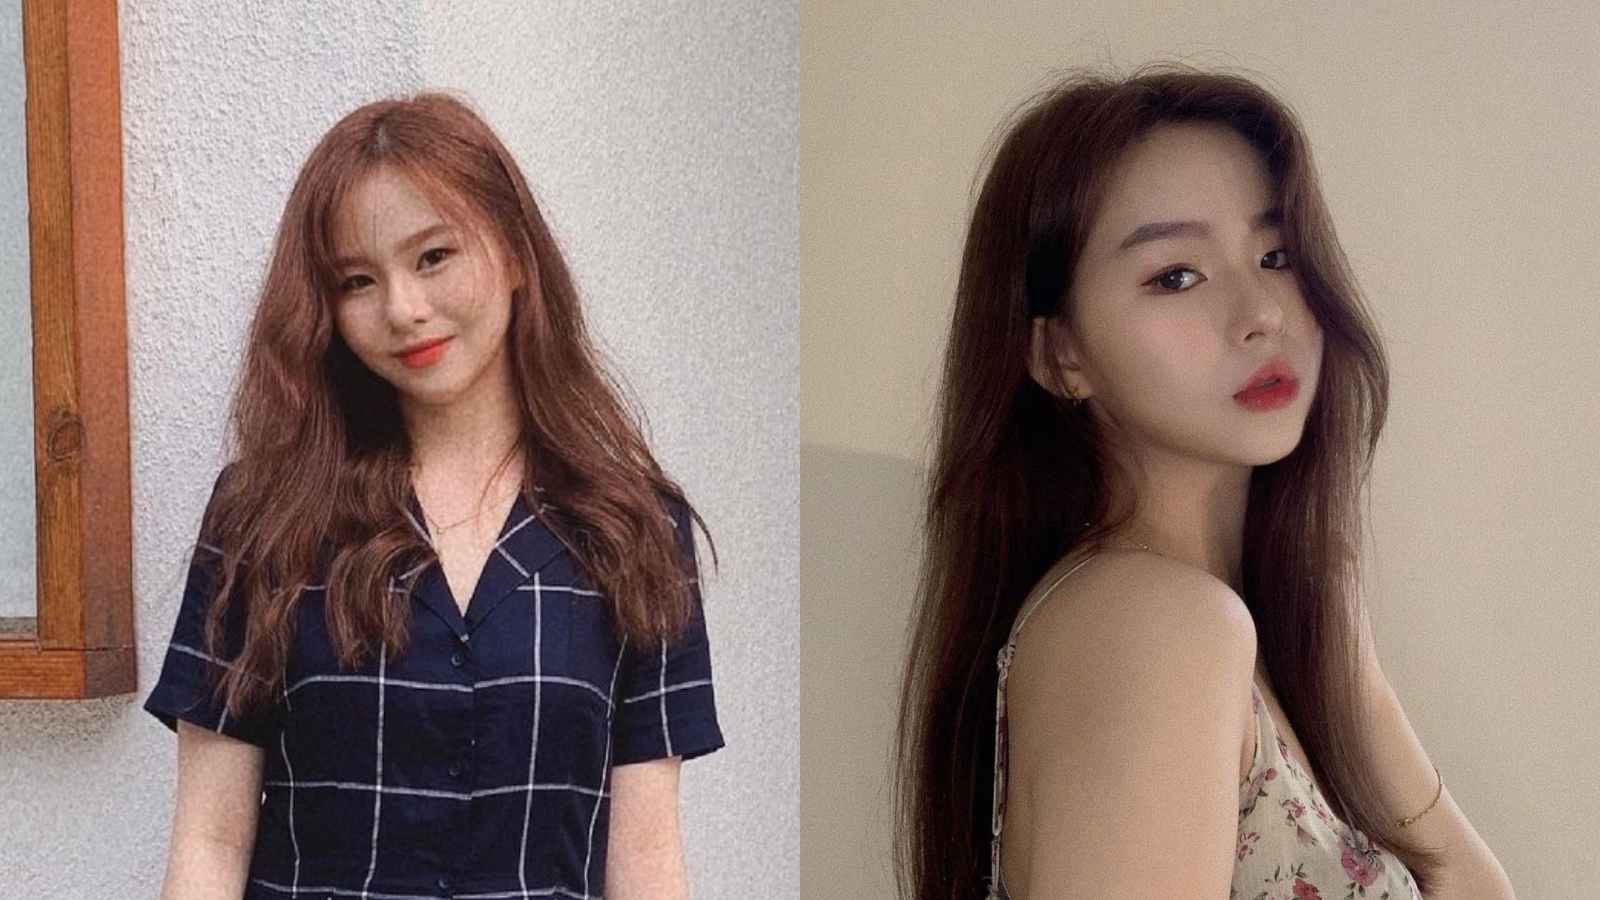 Fakta dan Profil Veruve, TikToker Cantik Tolak Tawaran Idol SM Entertainment